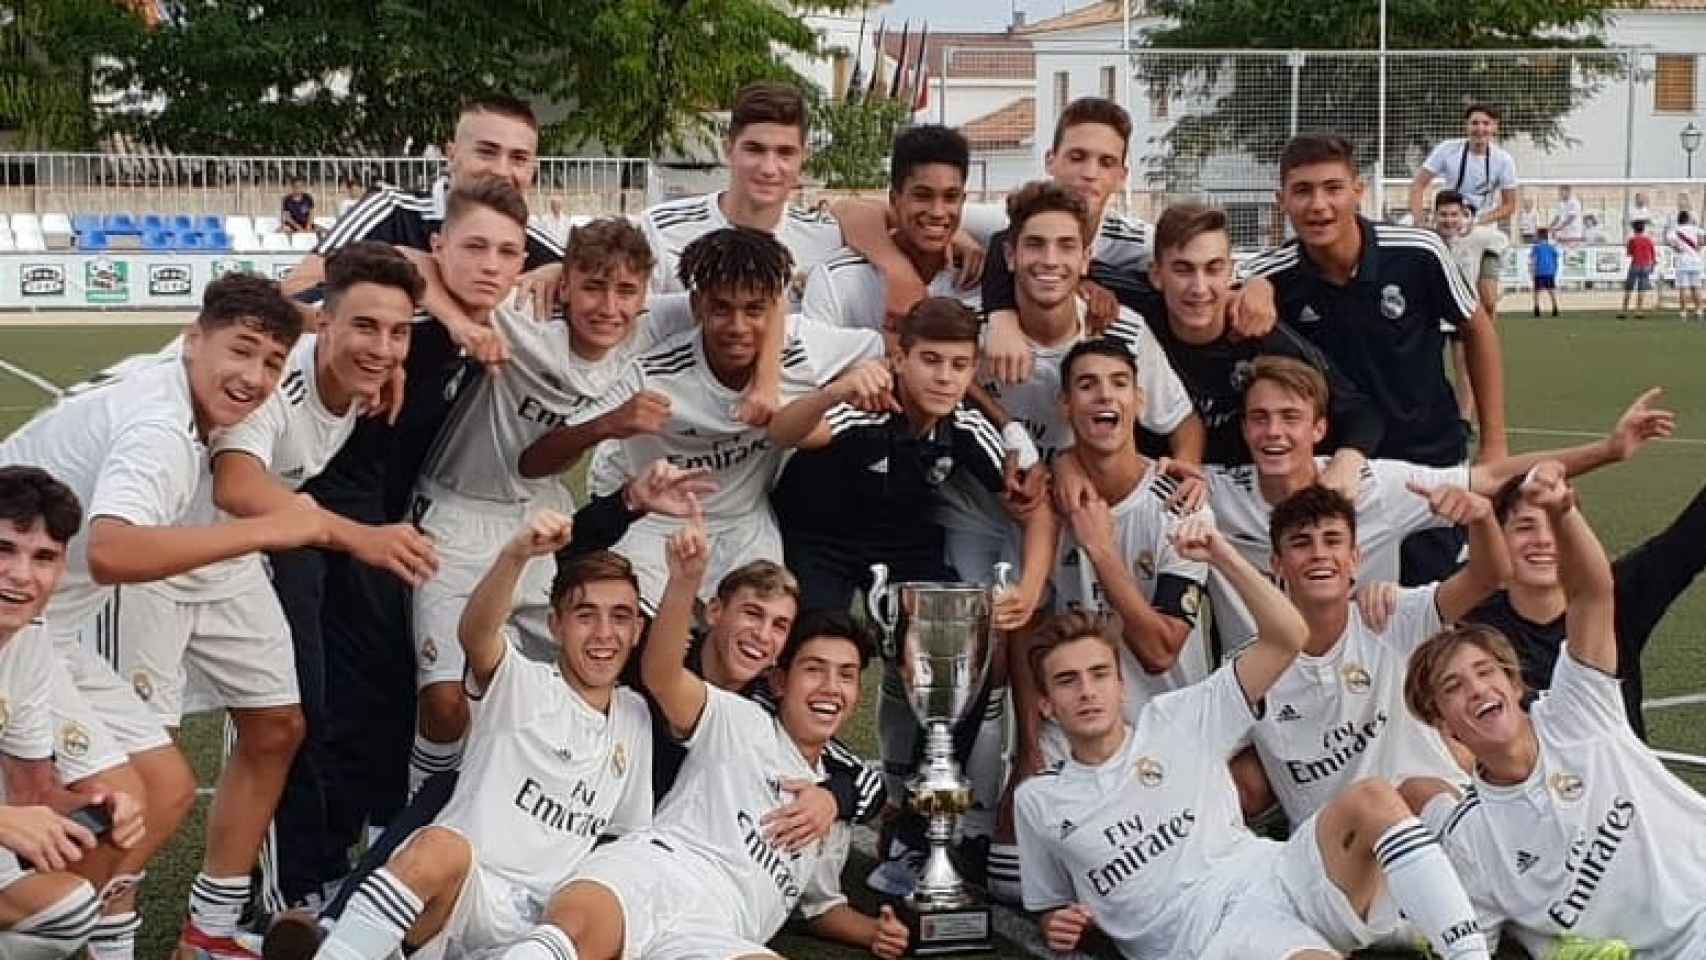 El Juvenil C gana el Trofeo de Brunete contra el Atlético de Madrid